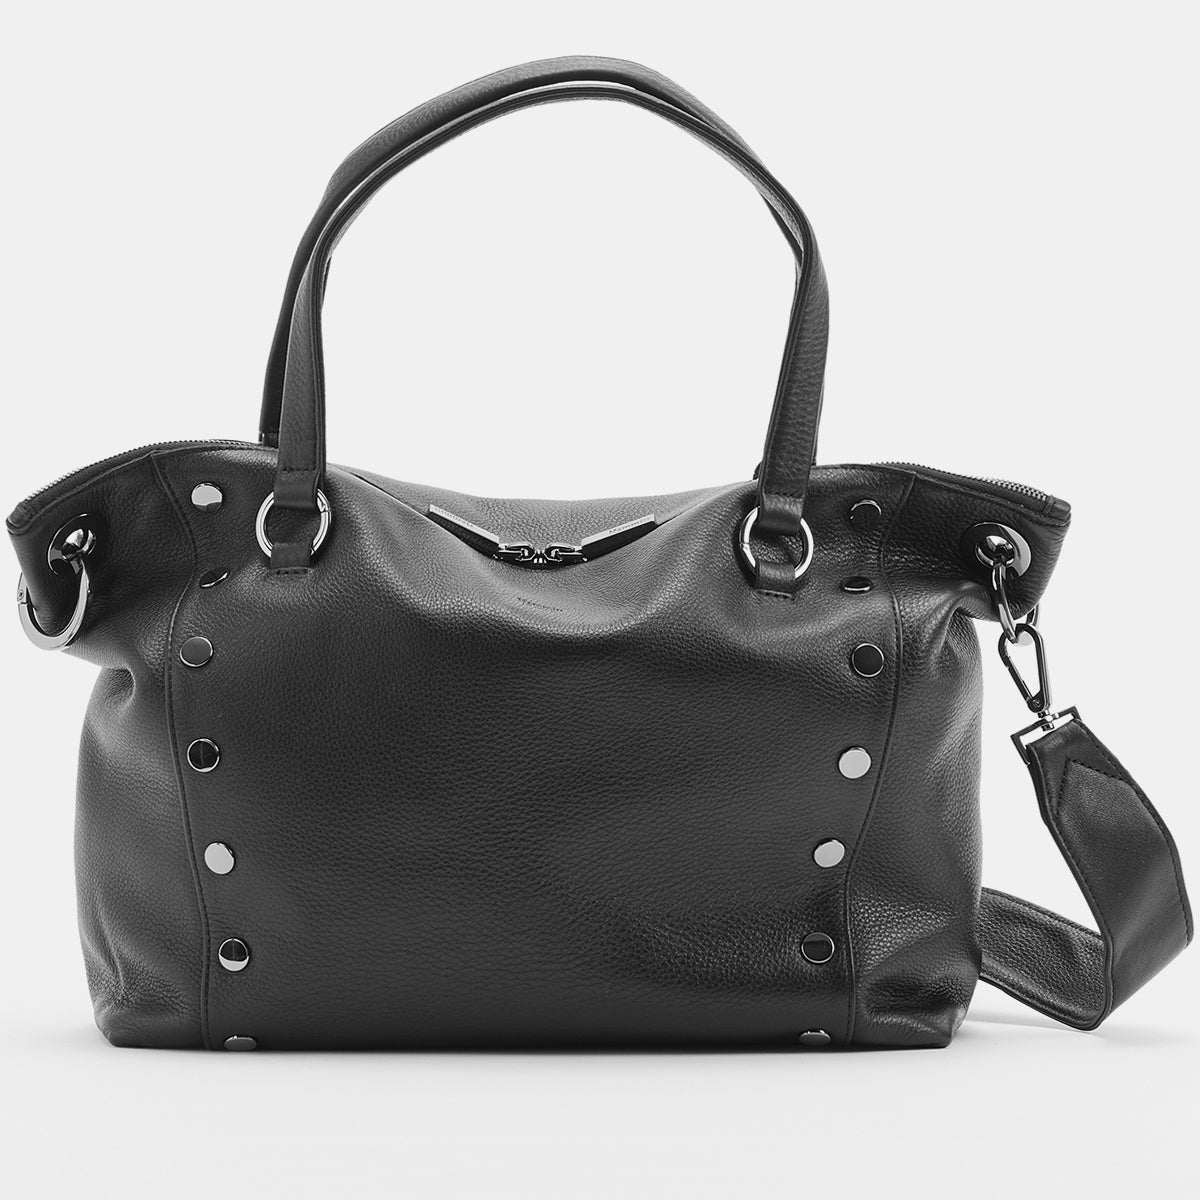 Buy ALARION Women Top Handle Satchel Handbags Shoulder Bag Messenger Tote  Bag Purse,Black at Amazon.in